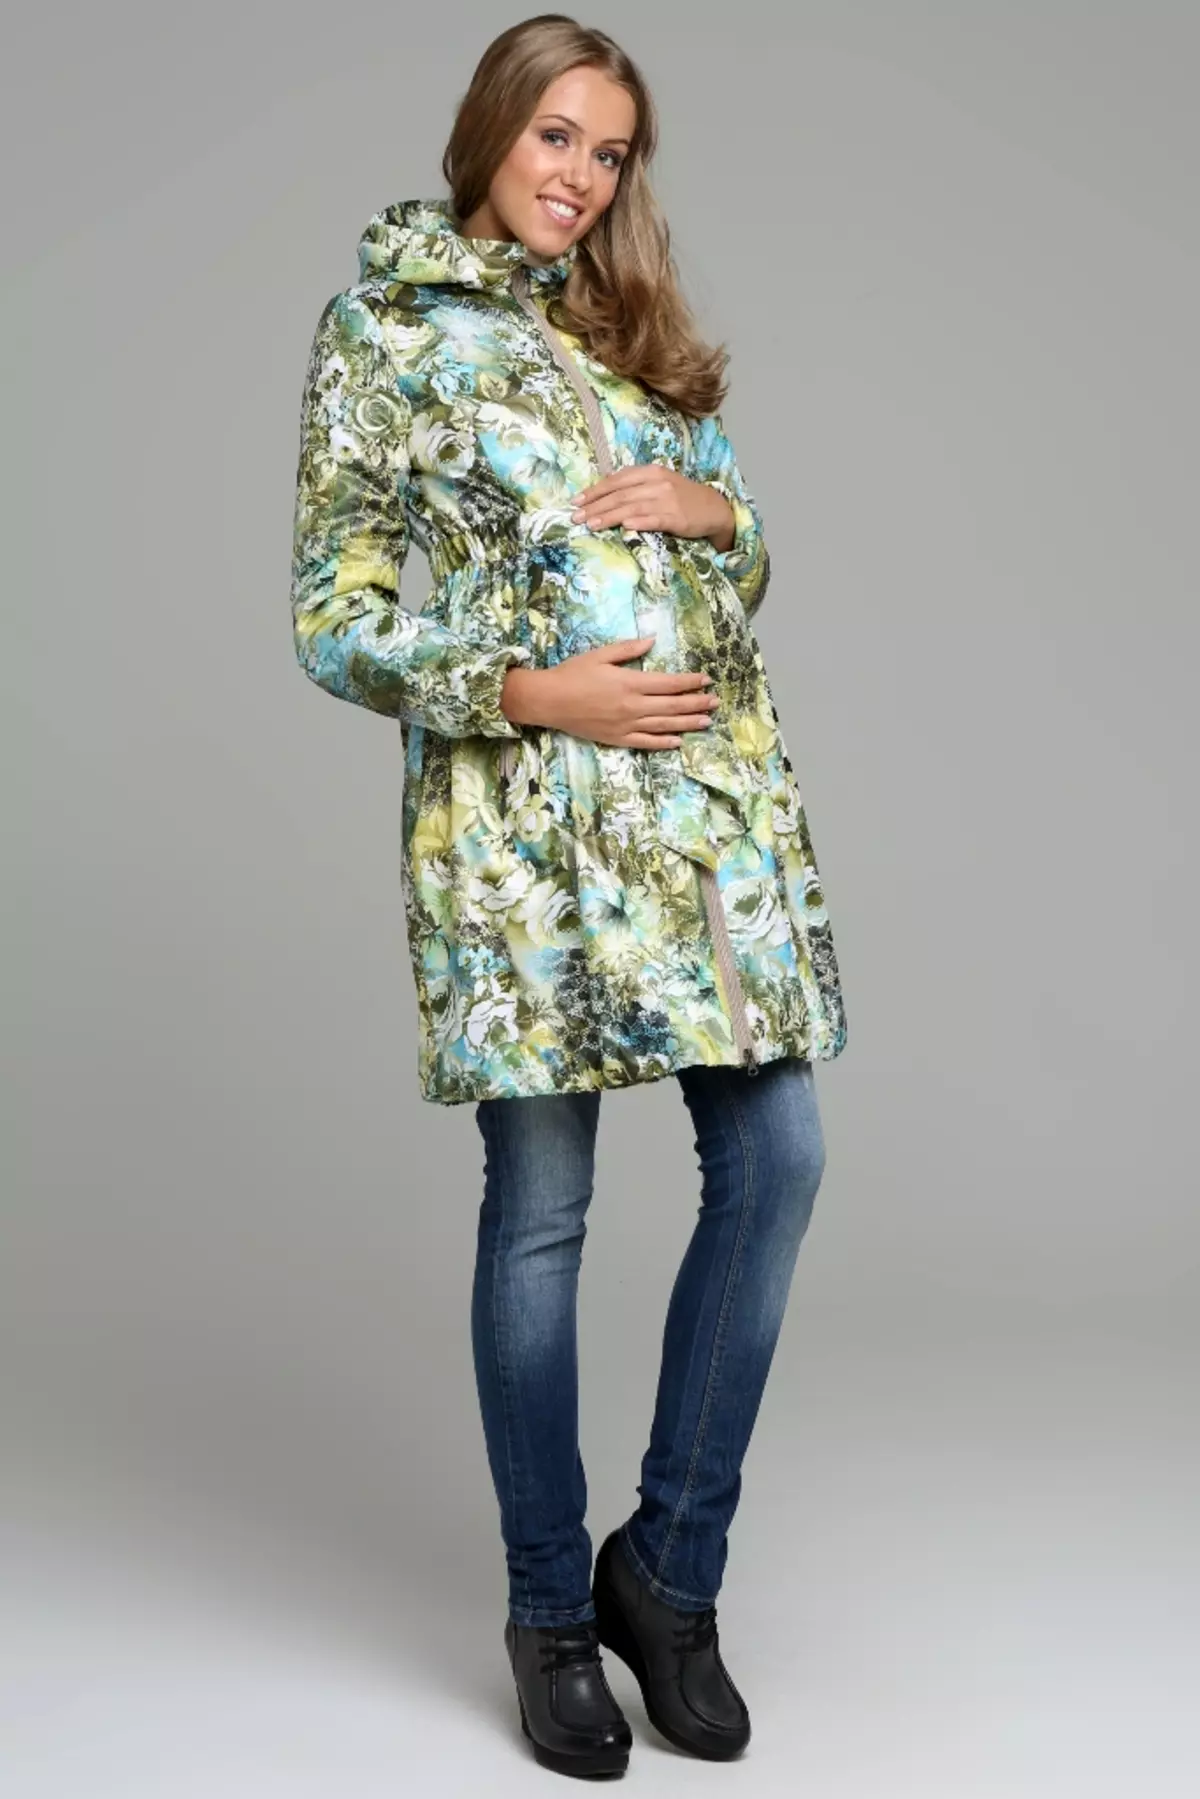 Callao para mulleres embarazadas (40 fotos): abrigo e capa e chaqueta Cloak por Adel, HM, Modress e Mama doce 359_17